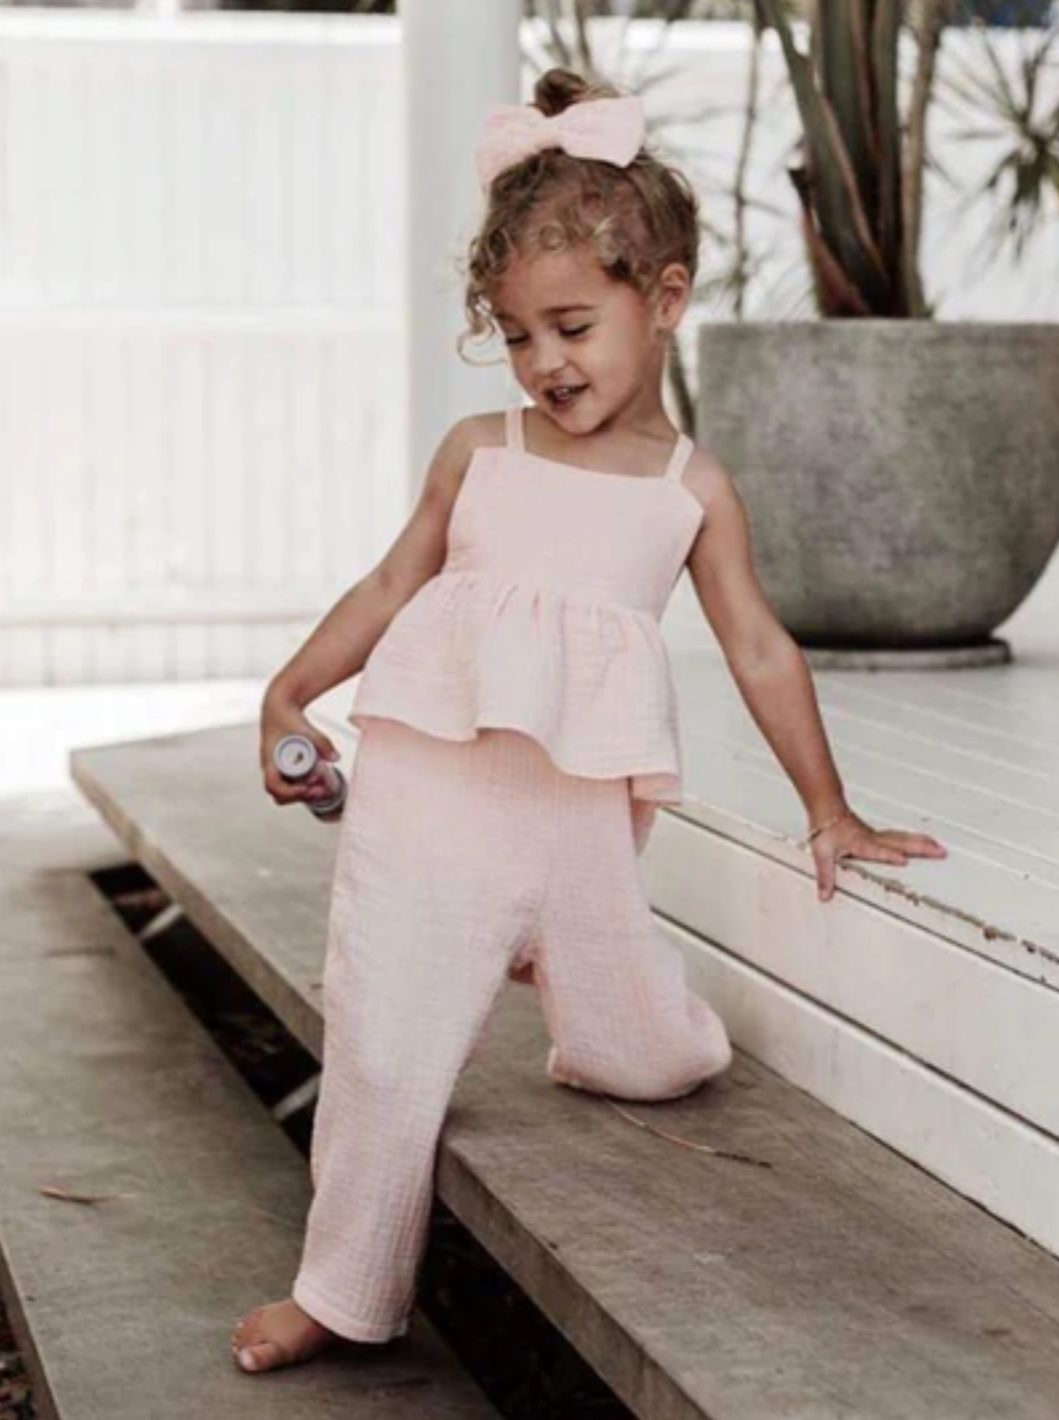 Cute Toddler Outfit Ideas | Girls Pink Peplum Racerback Jumpsuit